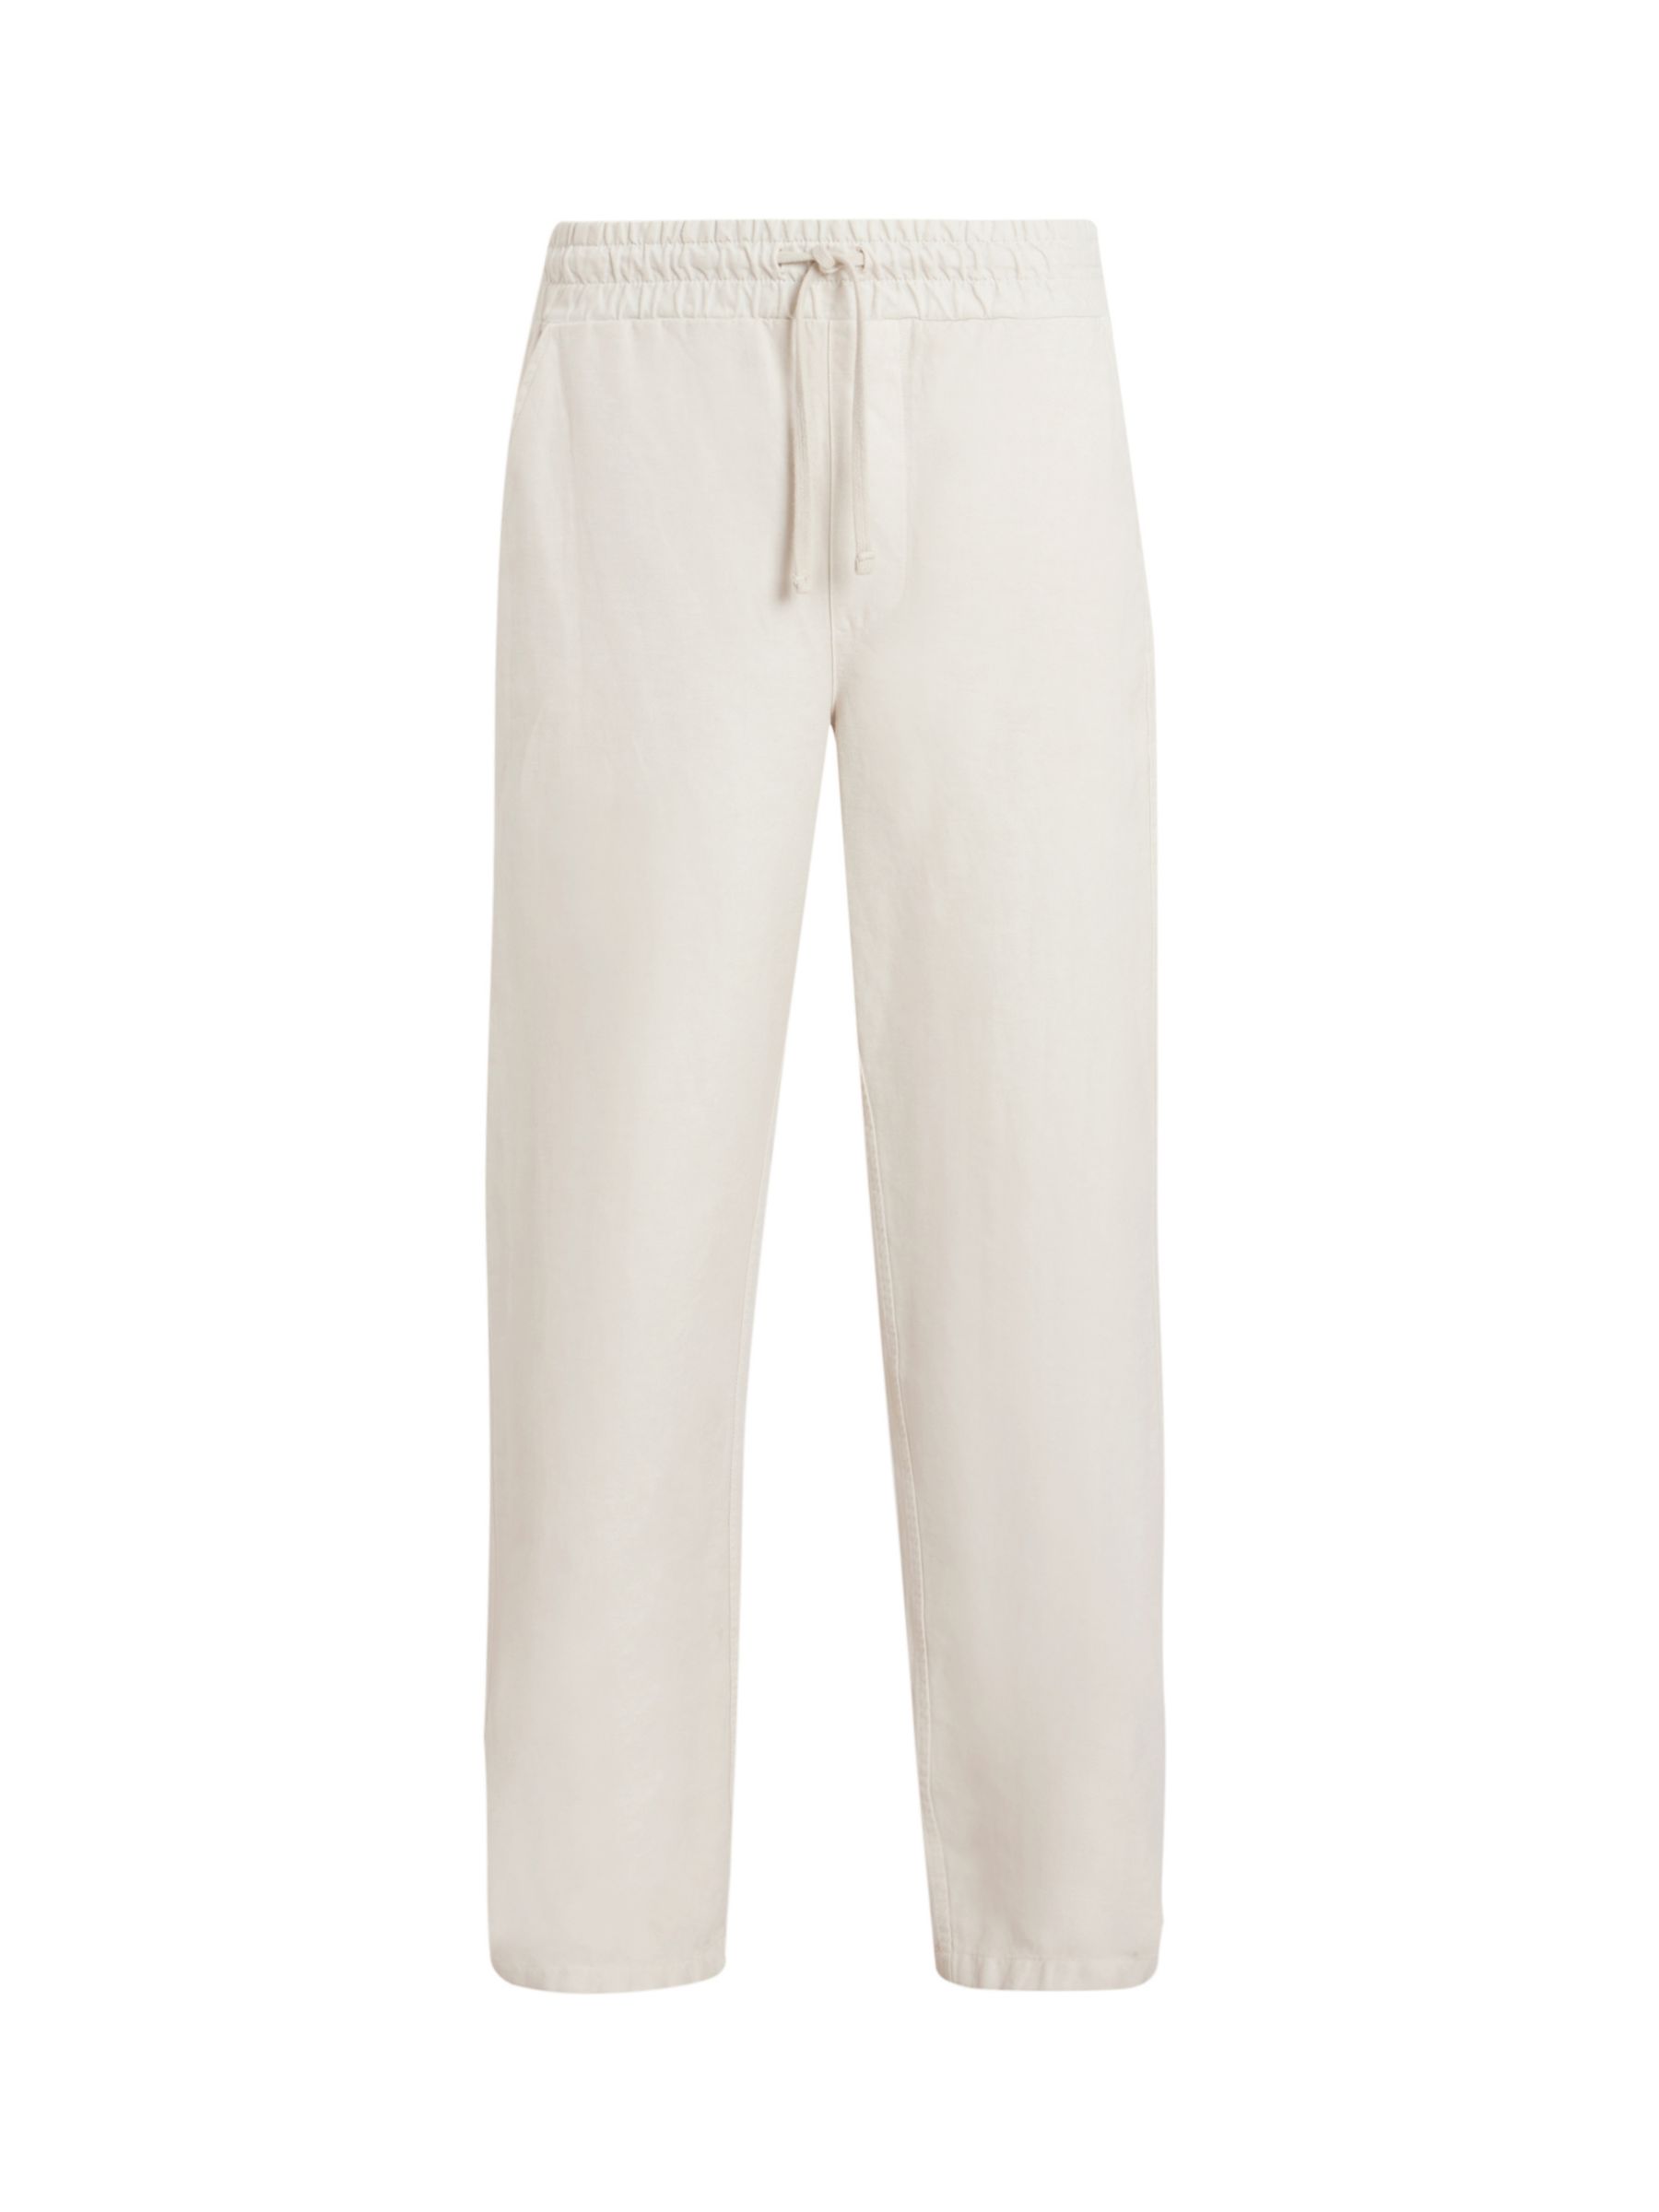 AllSaints Hanbury Straight Trousers, Oyster Grey, L